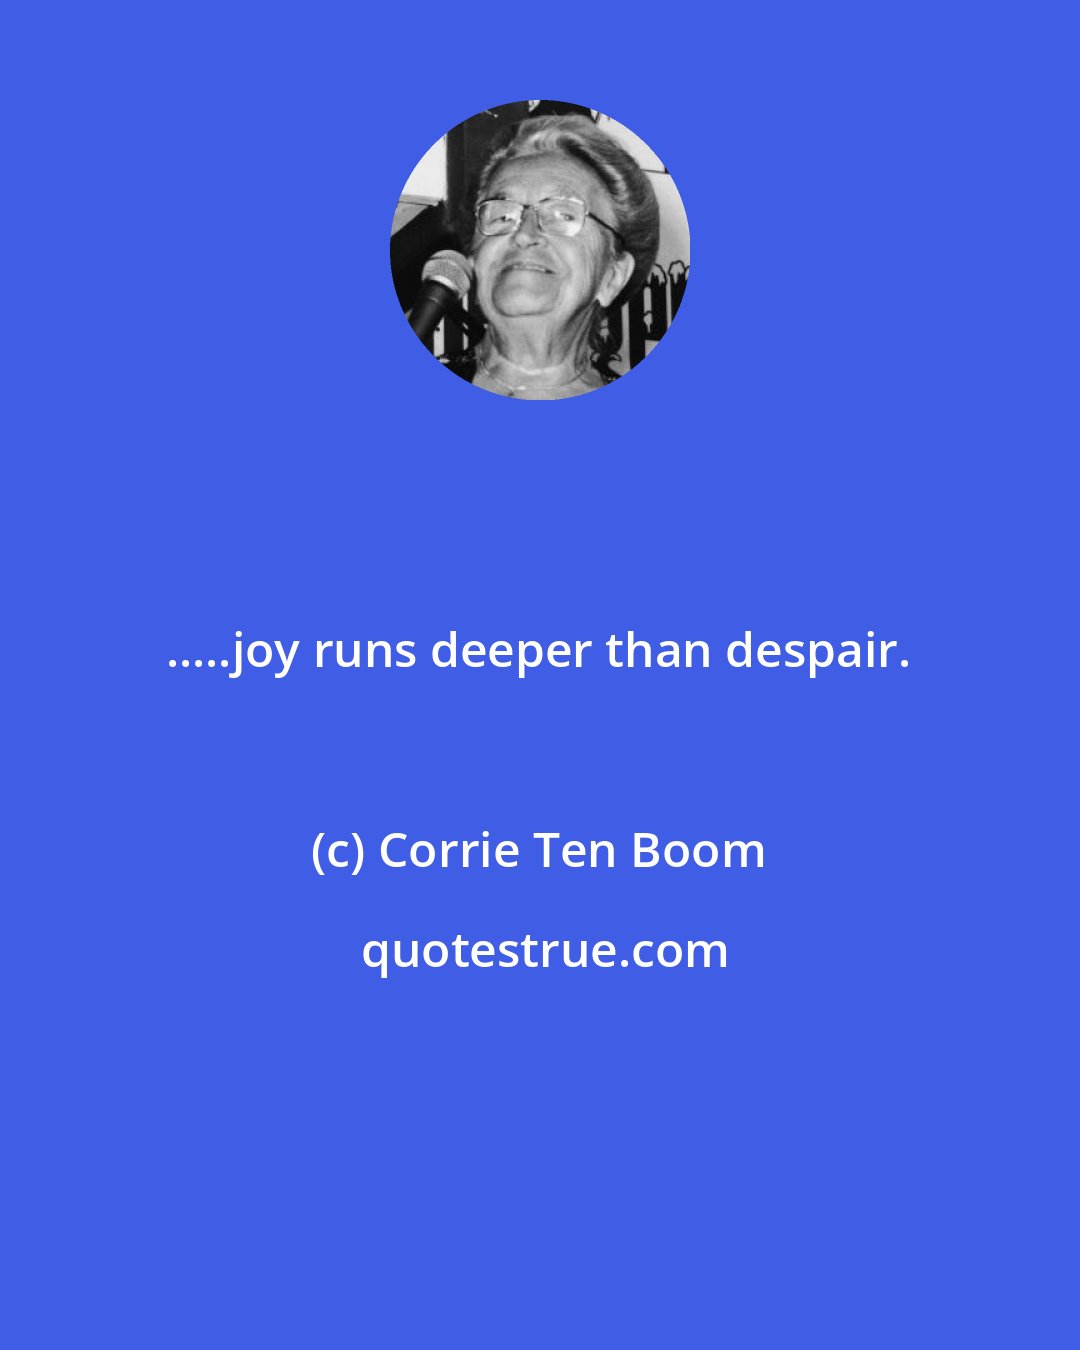 Corrie Ten Boom: .....joy runs deeper than despair.